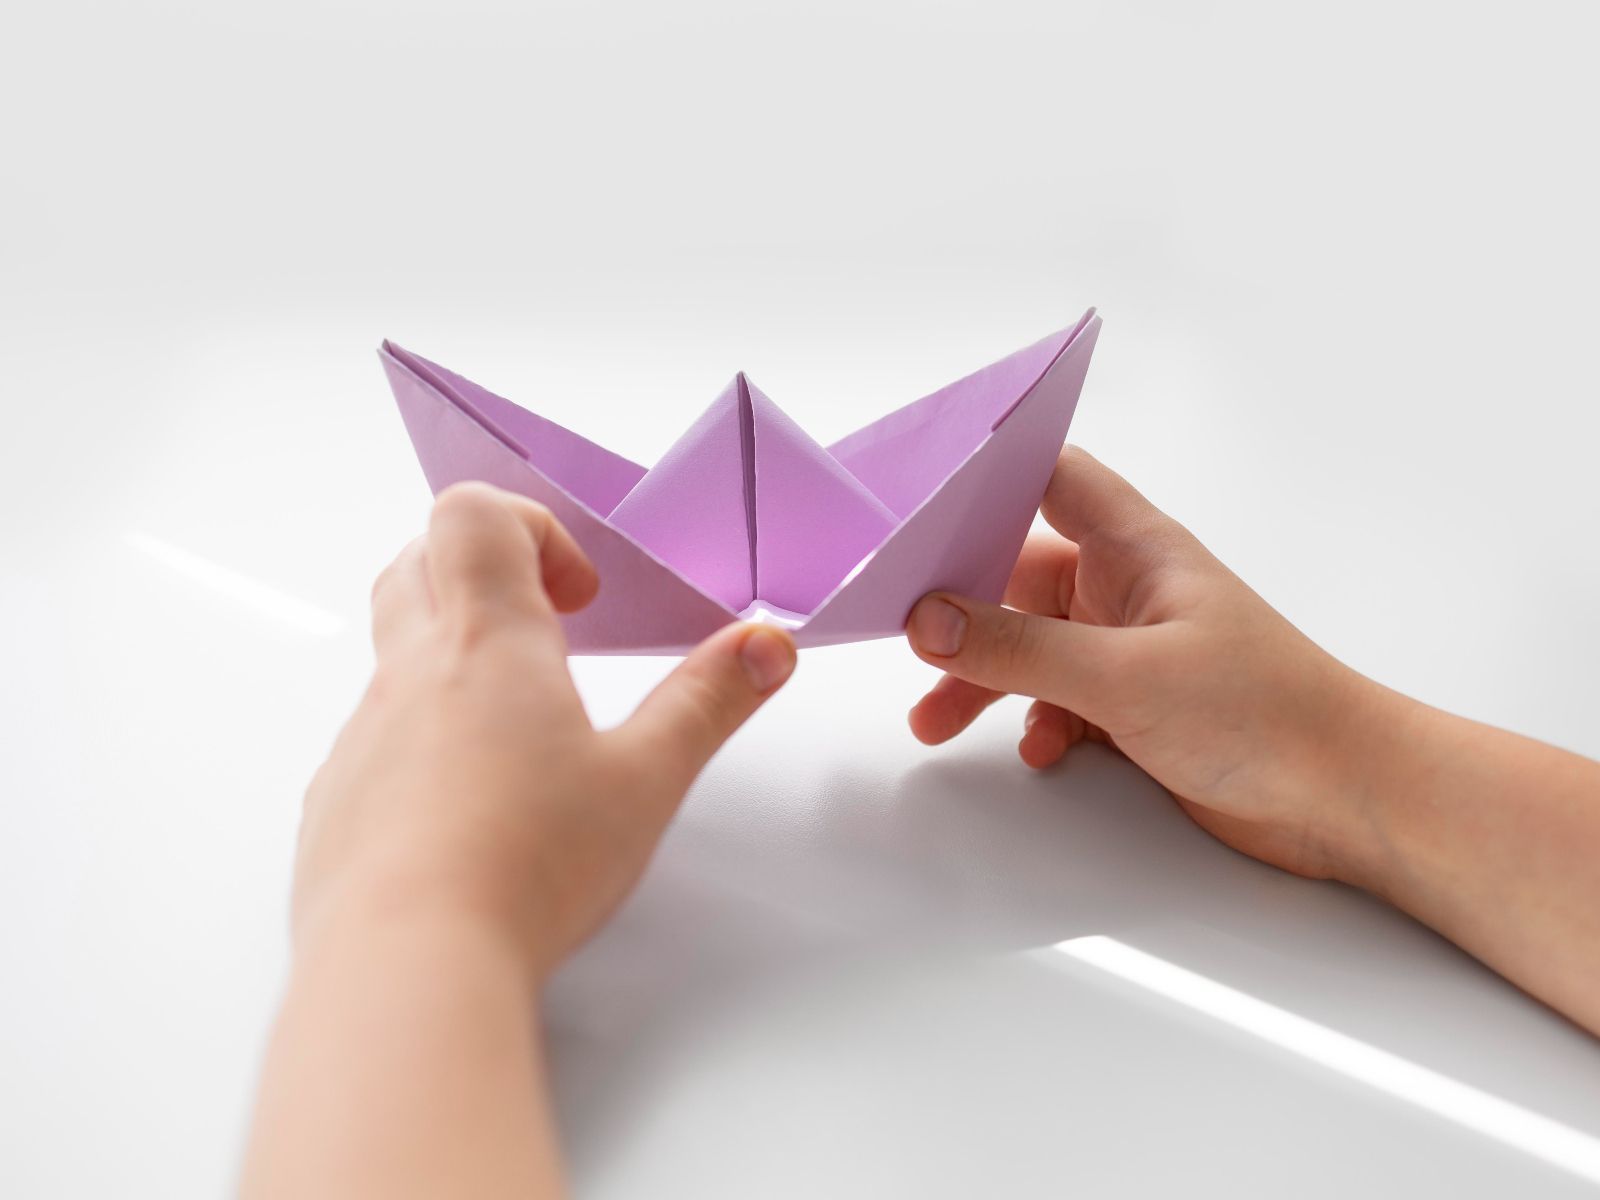 Origami con papel